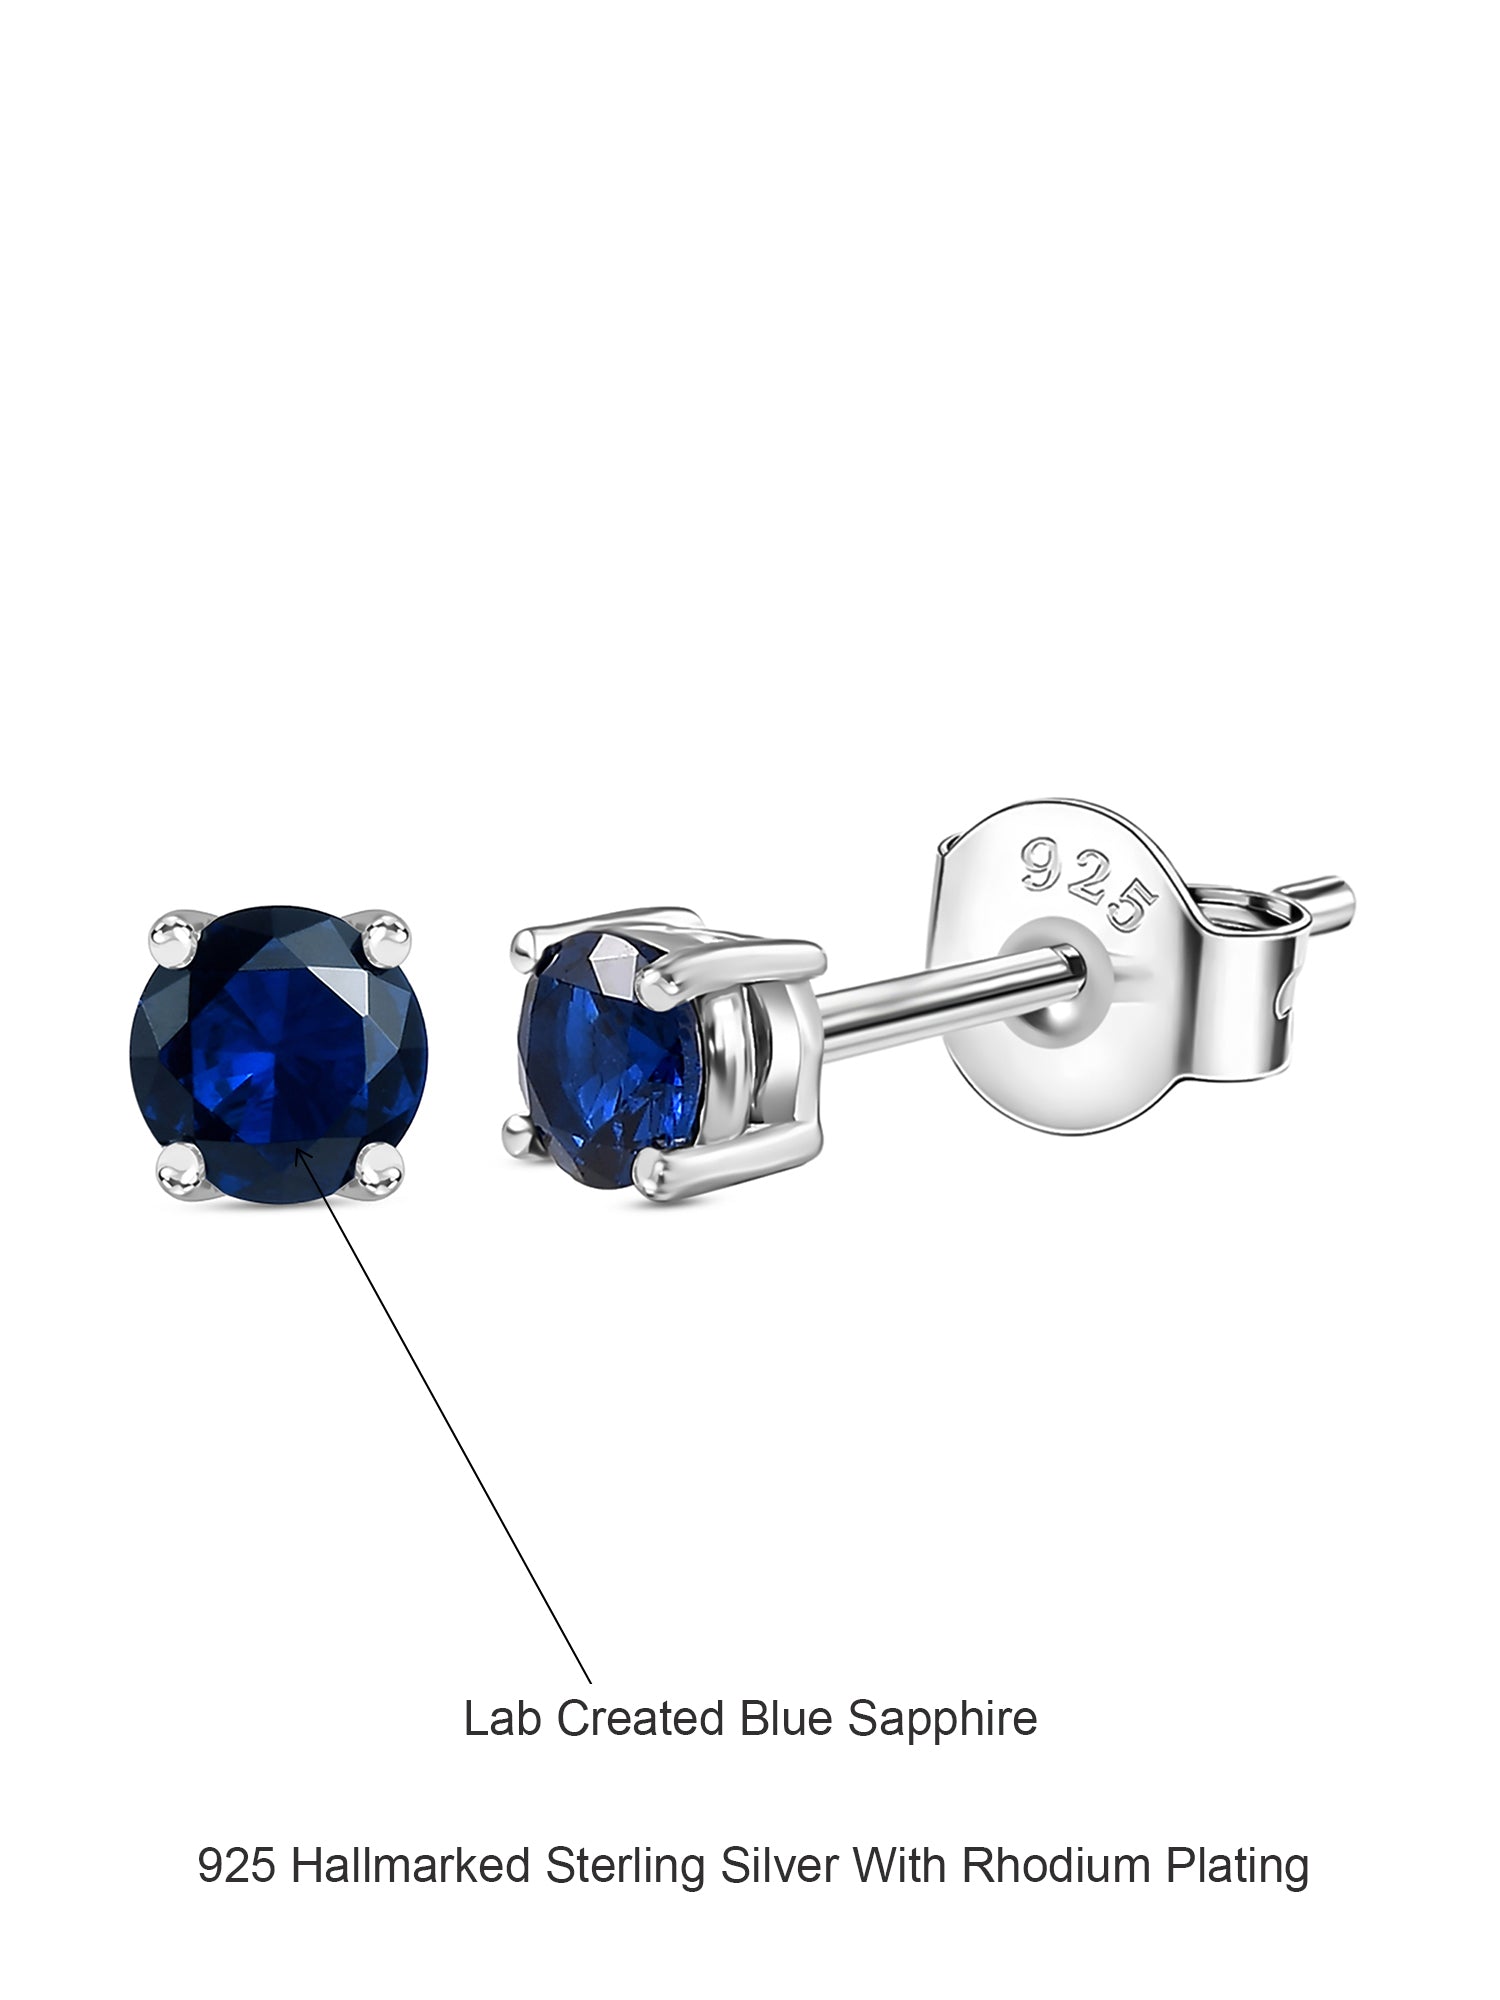 Blue Sapphire Studs Earring For Women